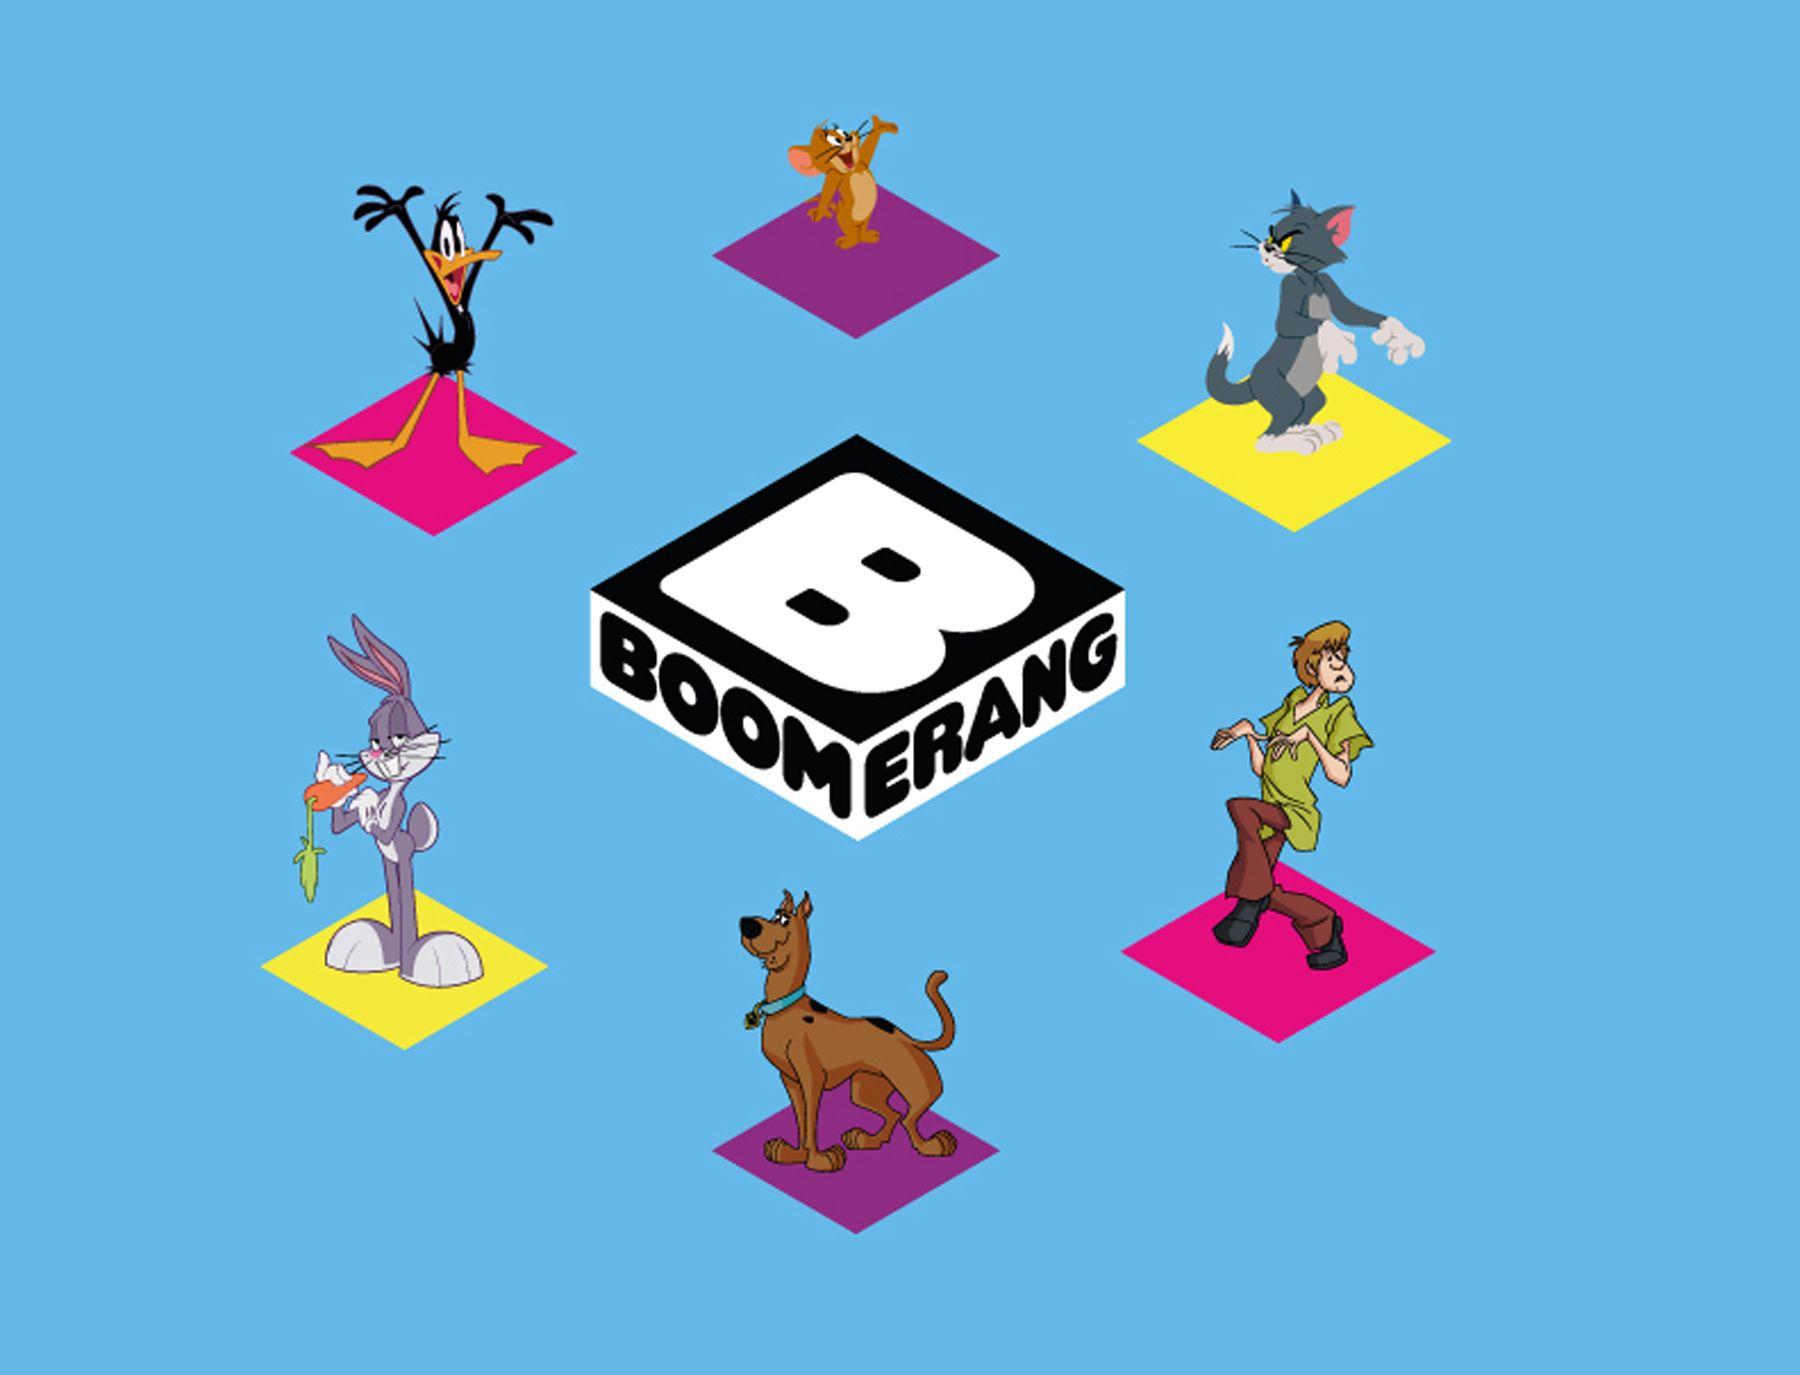 Boomerang From Cartoon Network 2015 Logo - Kidscreen » Archive » Boomerang lands in Korean market